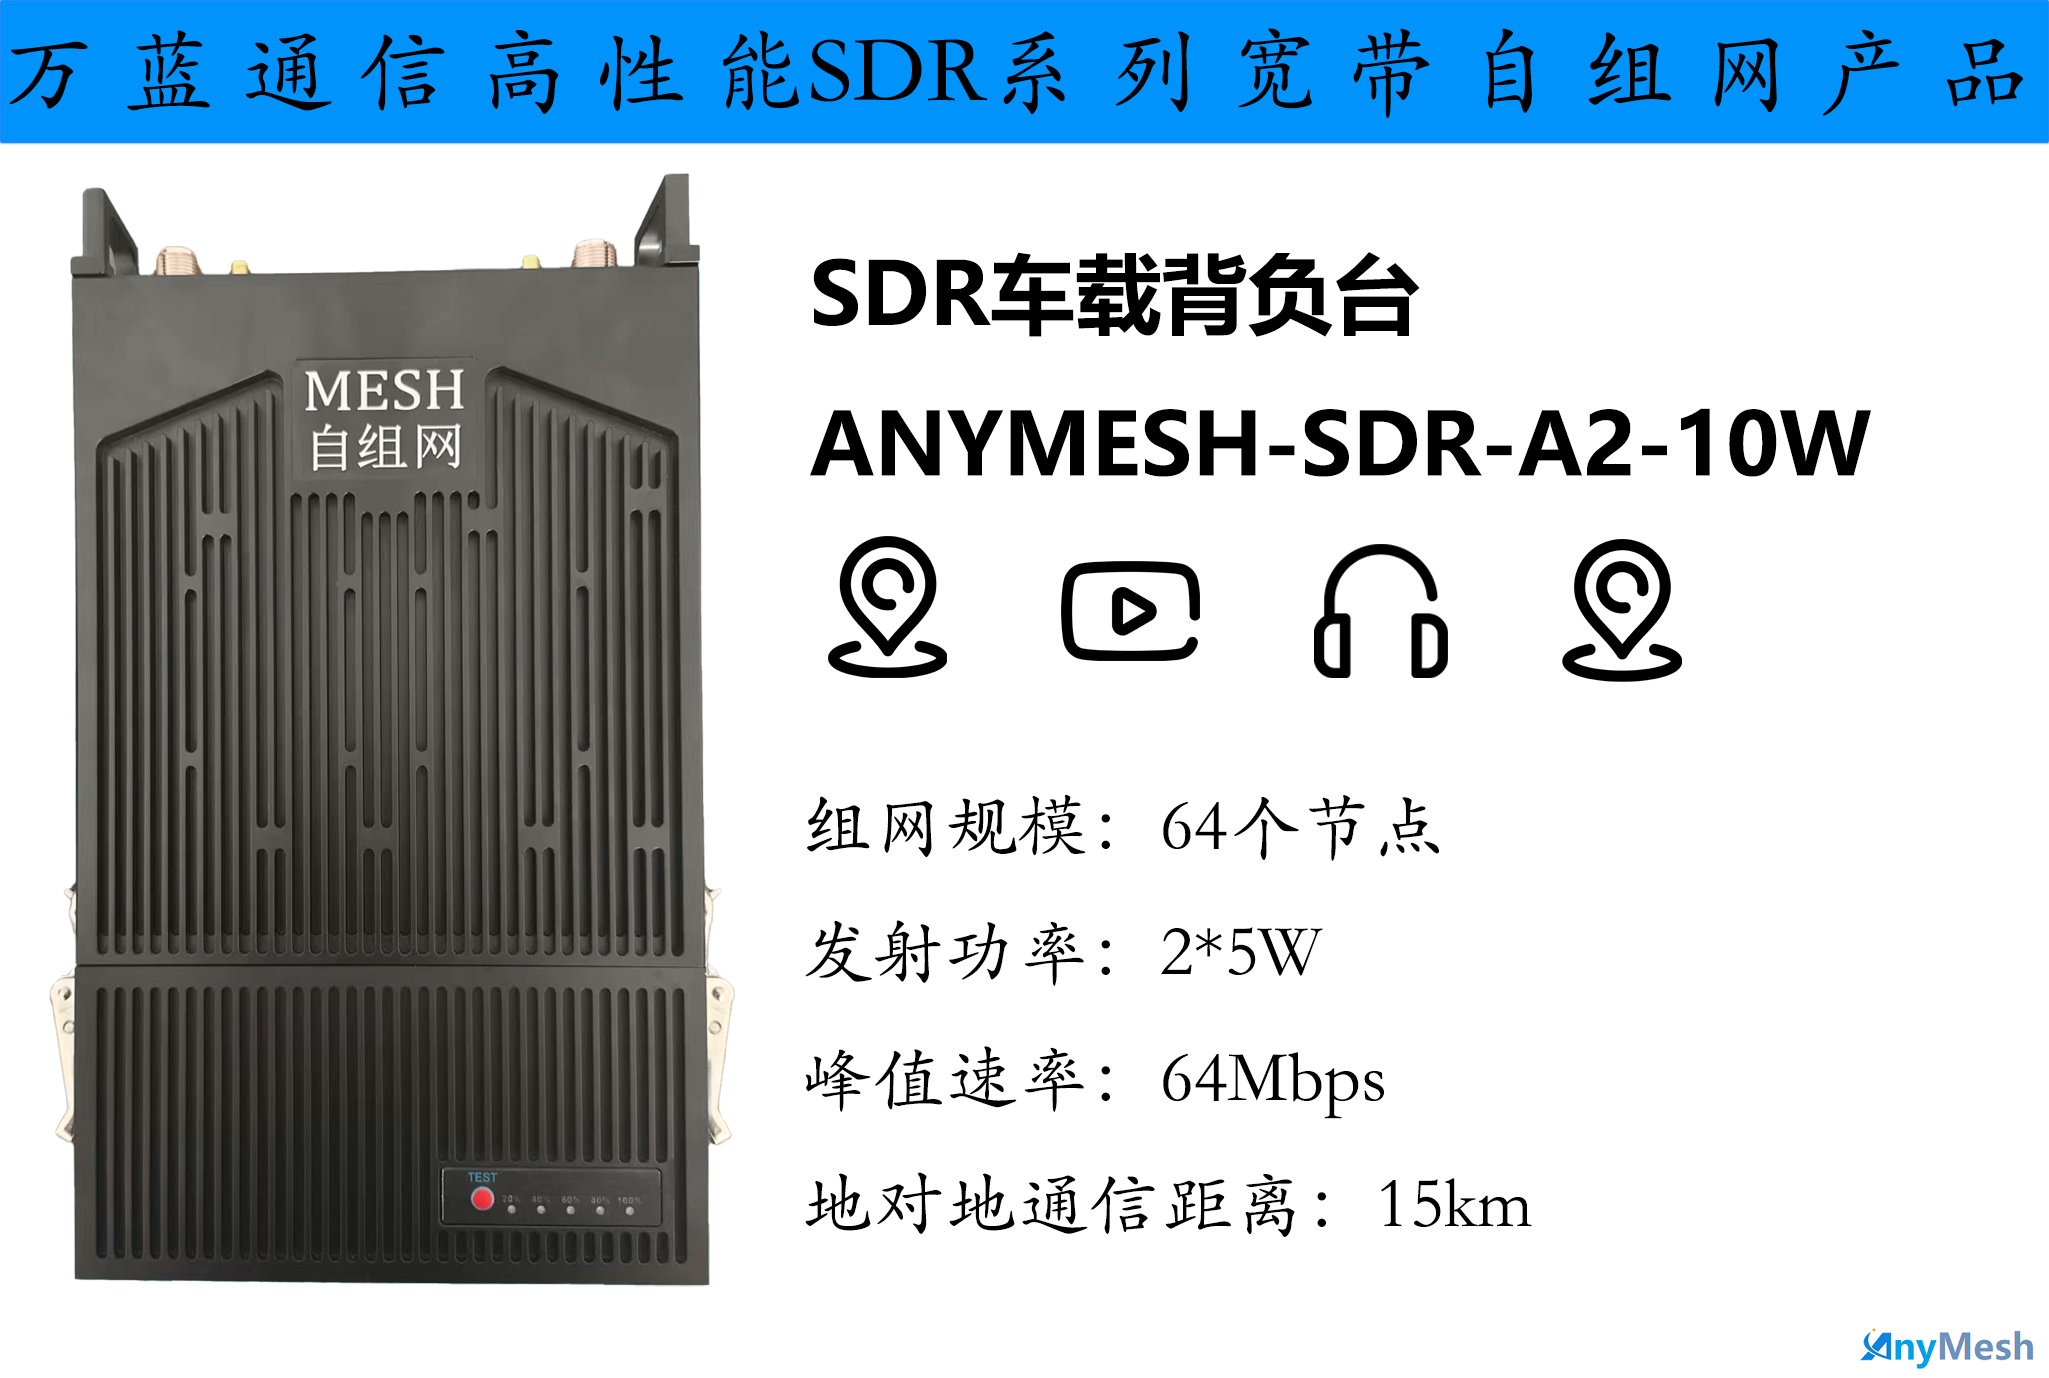 ANYMESH-SDR-A2-10W车载背负型自组网设备 10W大背负基